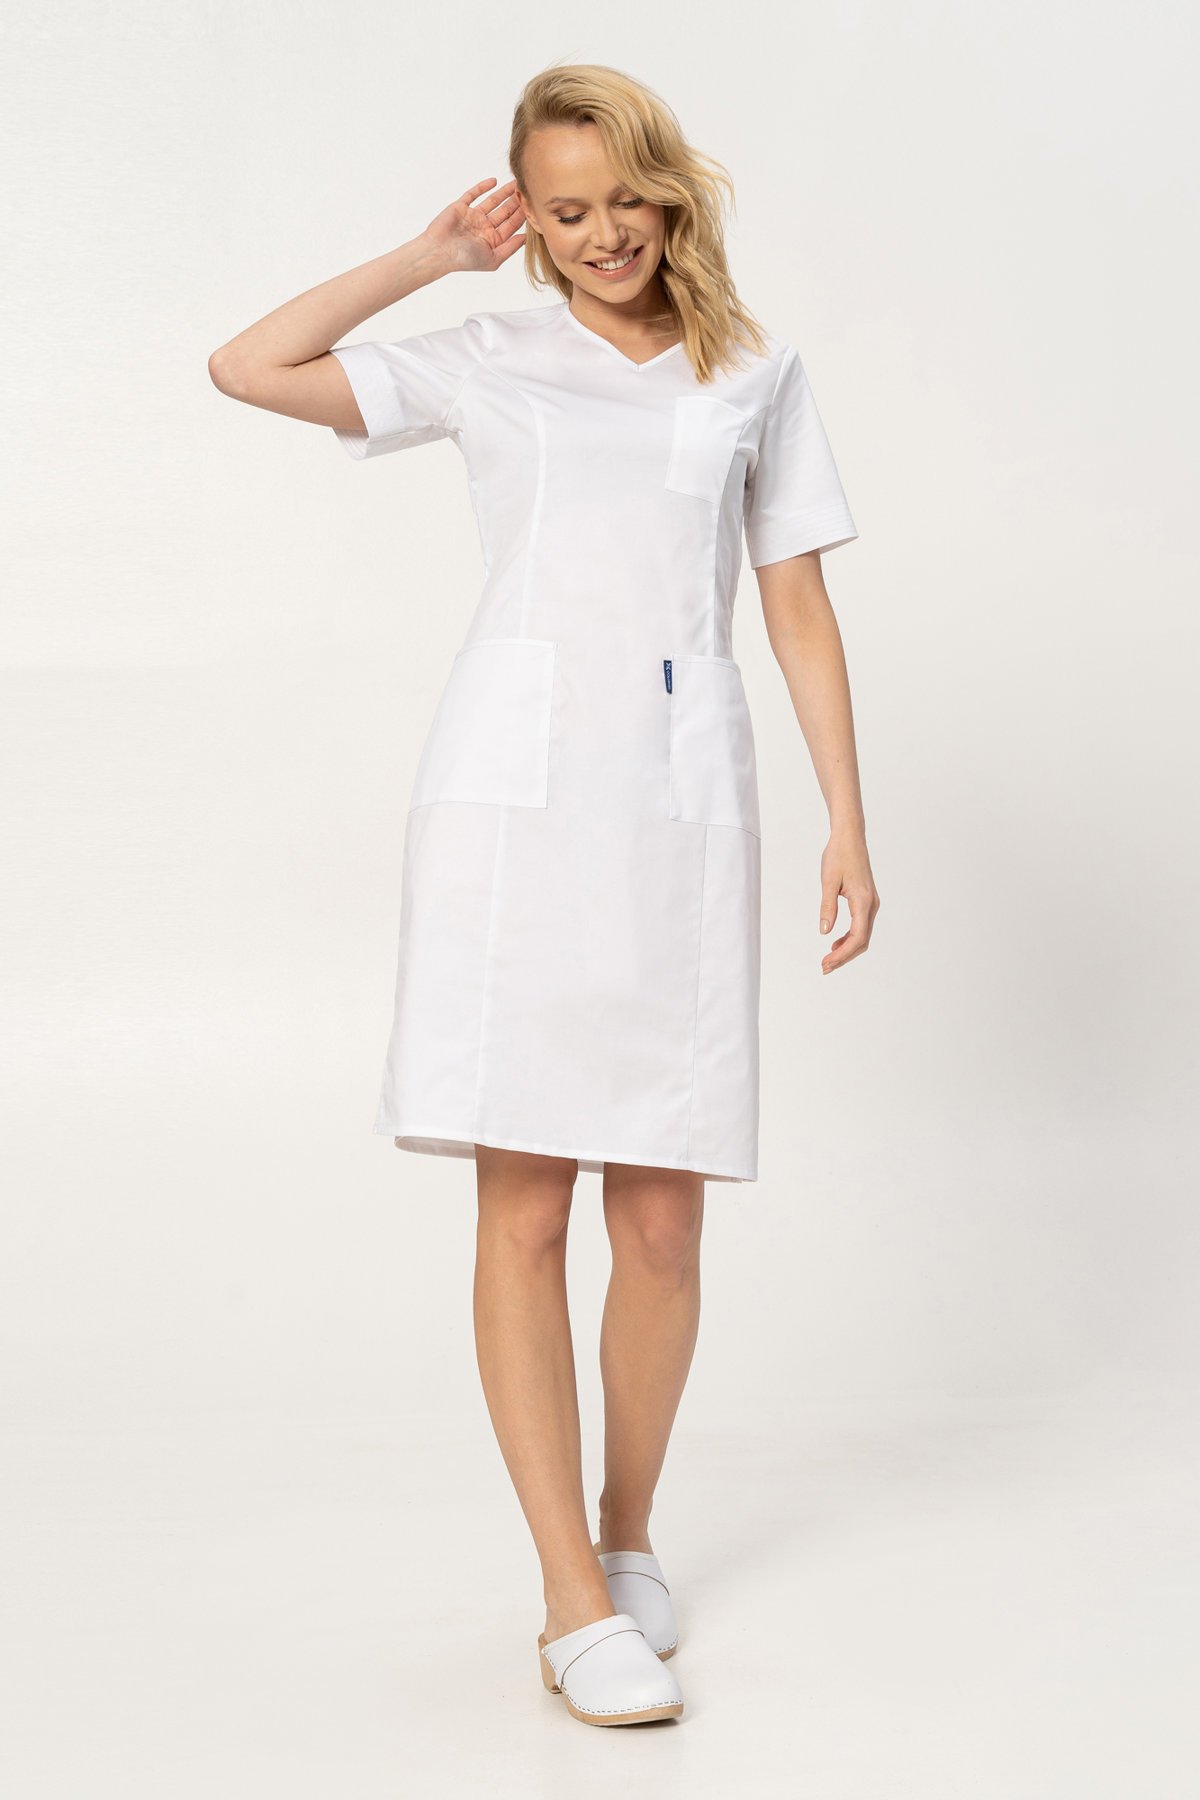 White Scrub Dresses Nursing Uniforms | Dresses Images 2022